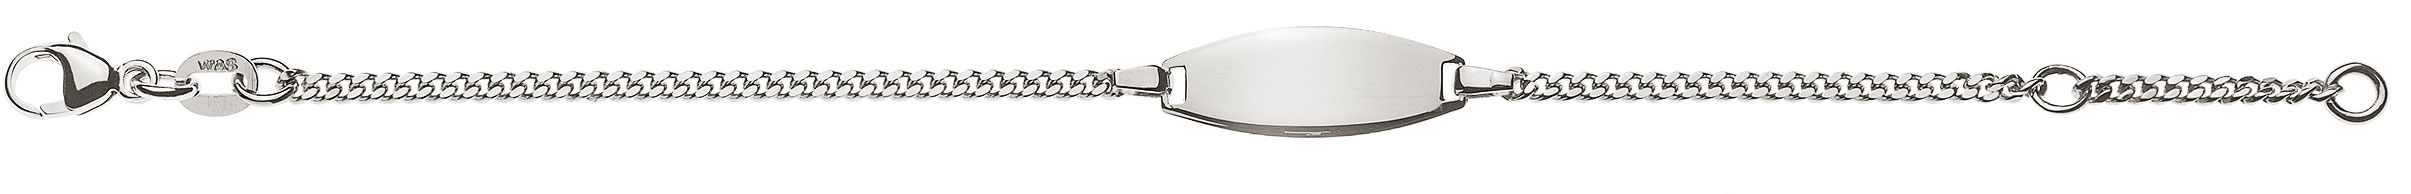 AURONOS Prestige ID-Bracelet en or blanc 18k Chaîne blindée polie 16cm